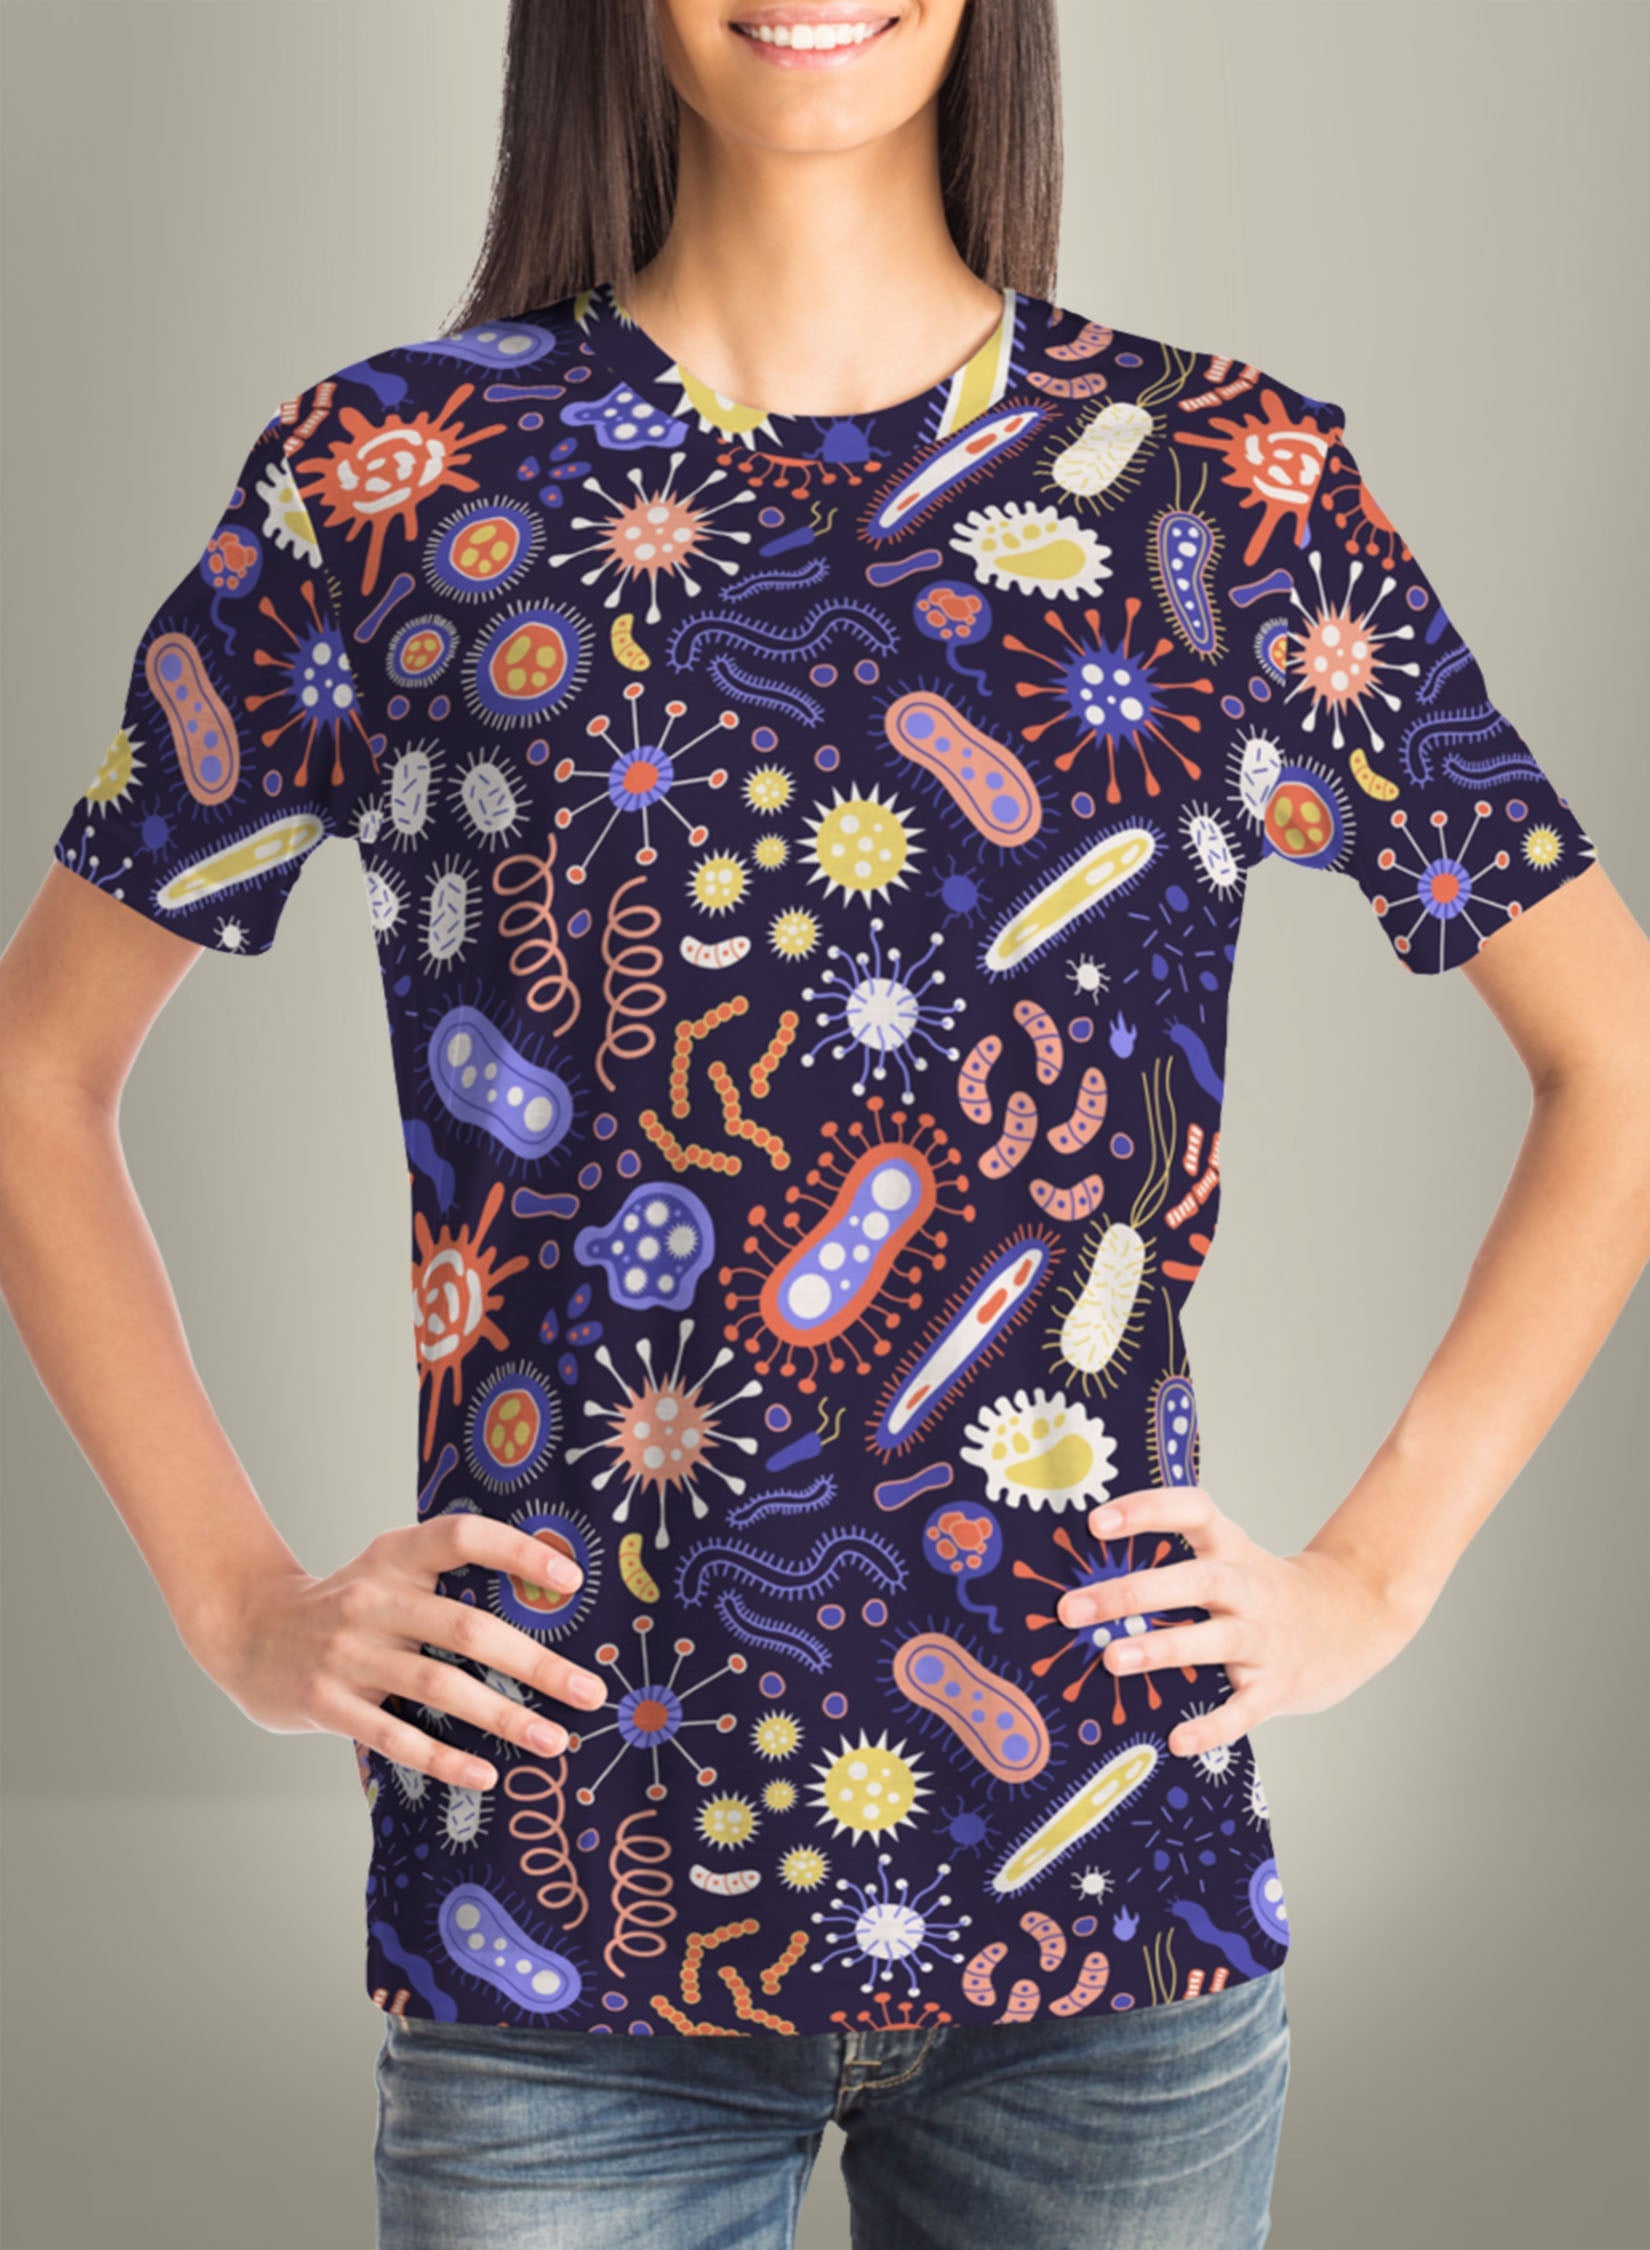 Microbes - Unisex Printed T-shirt